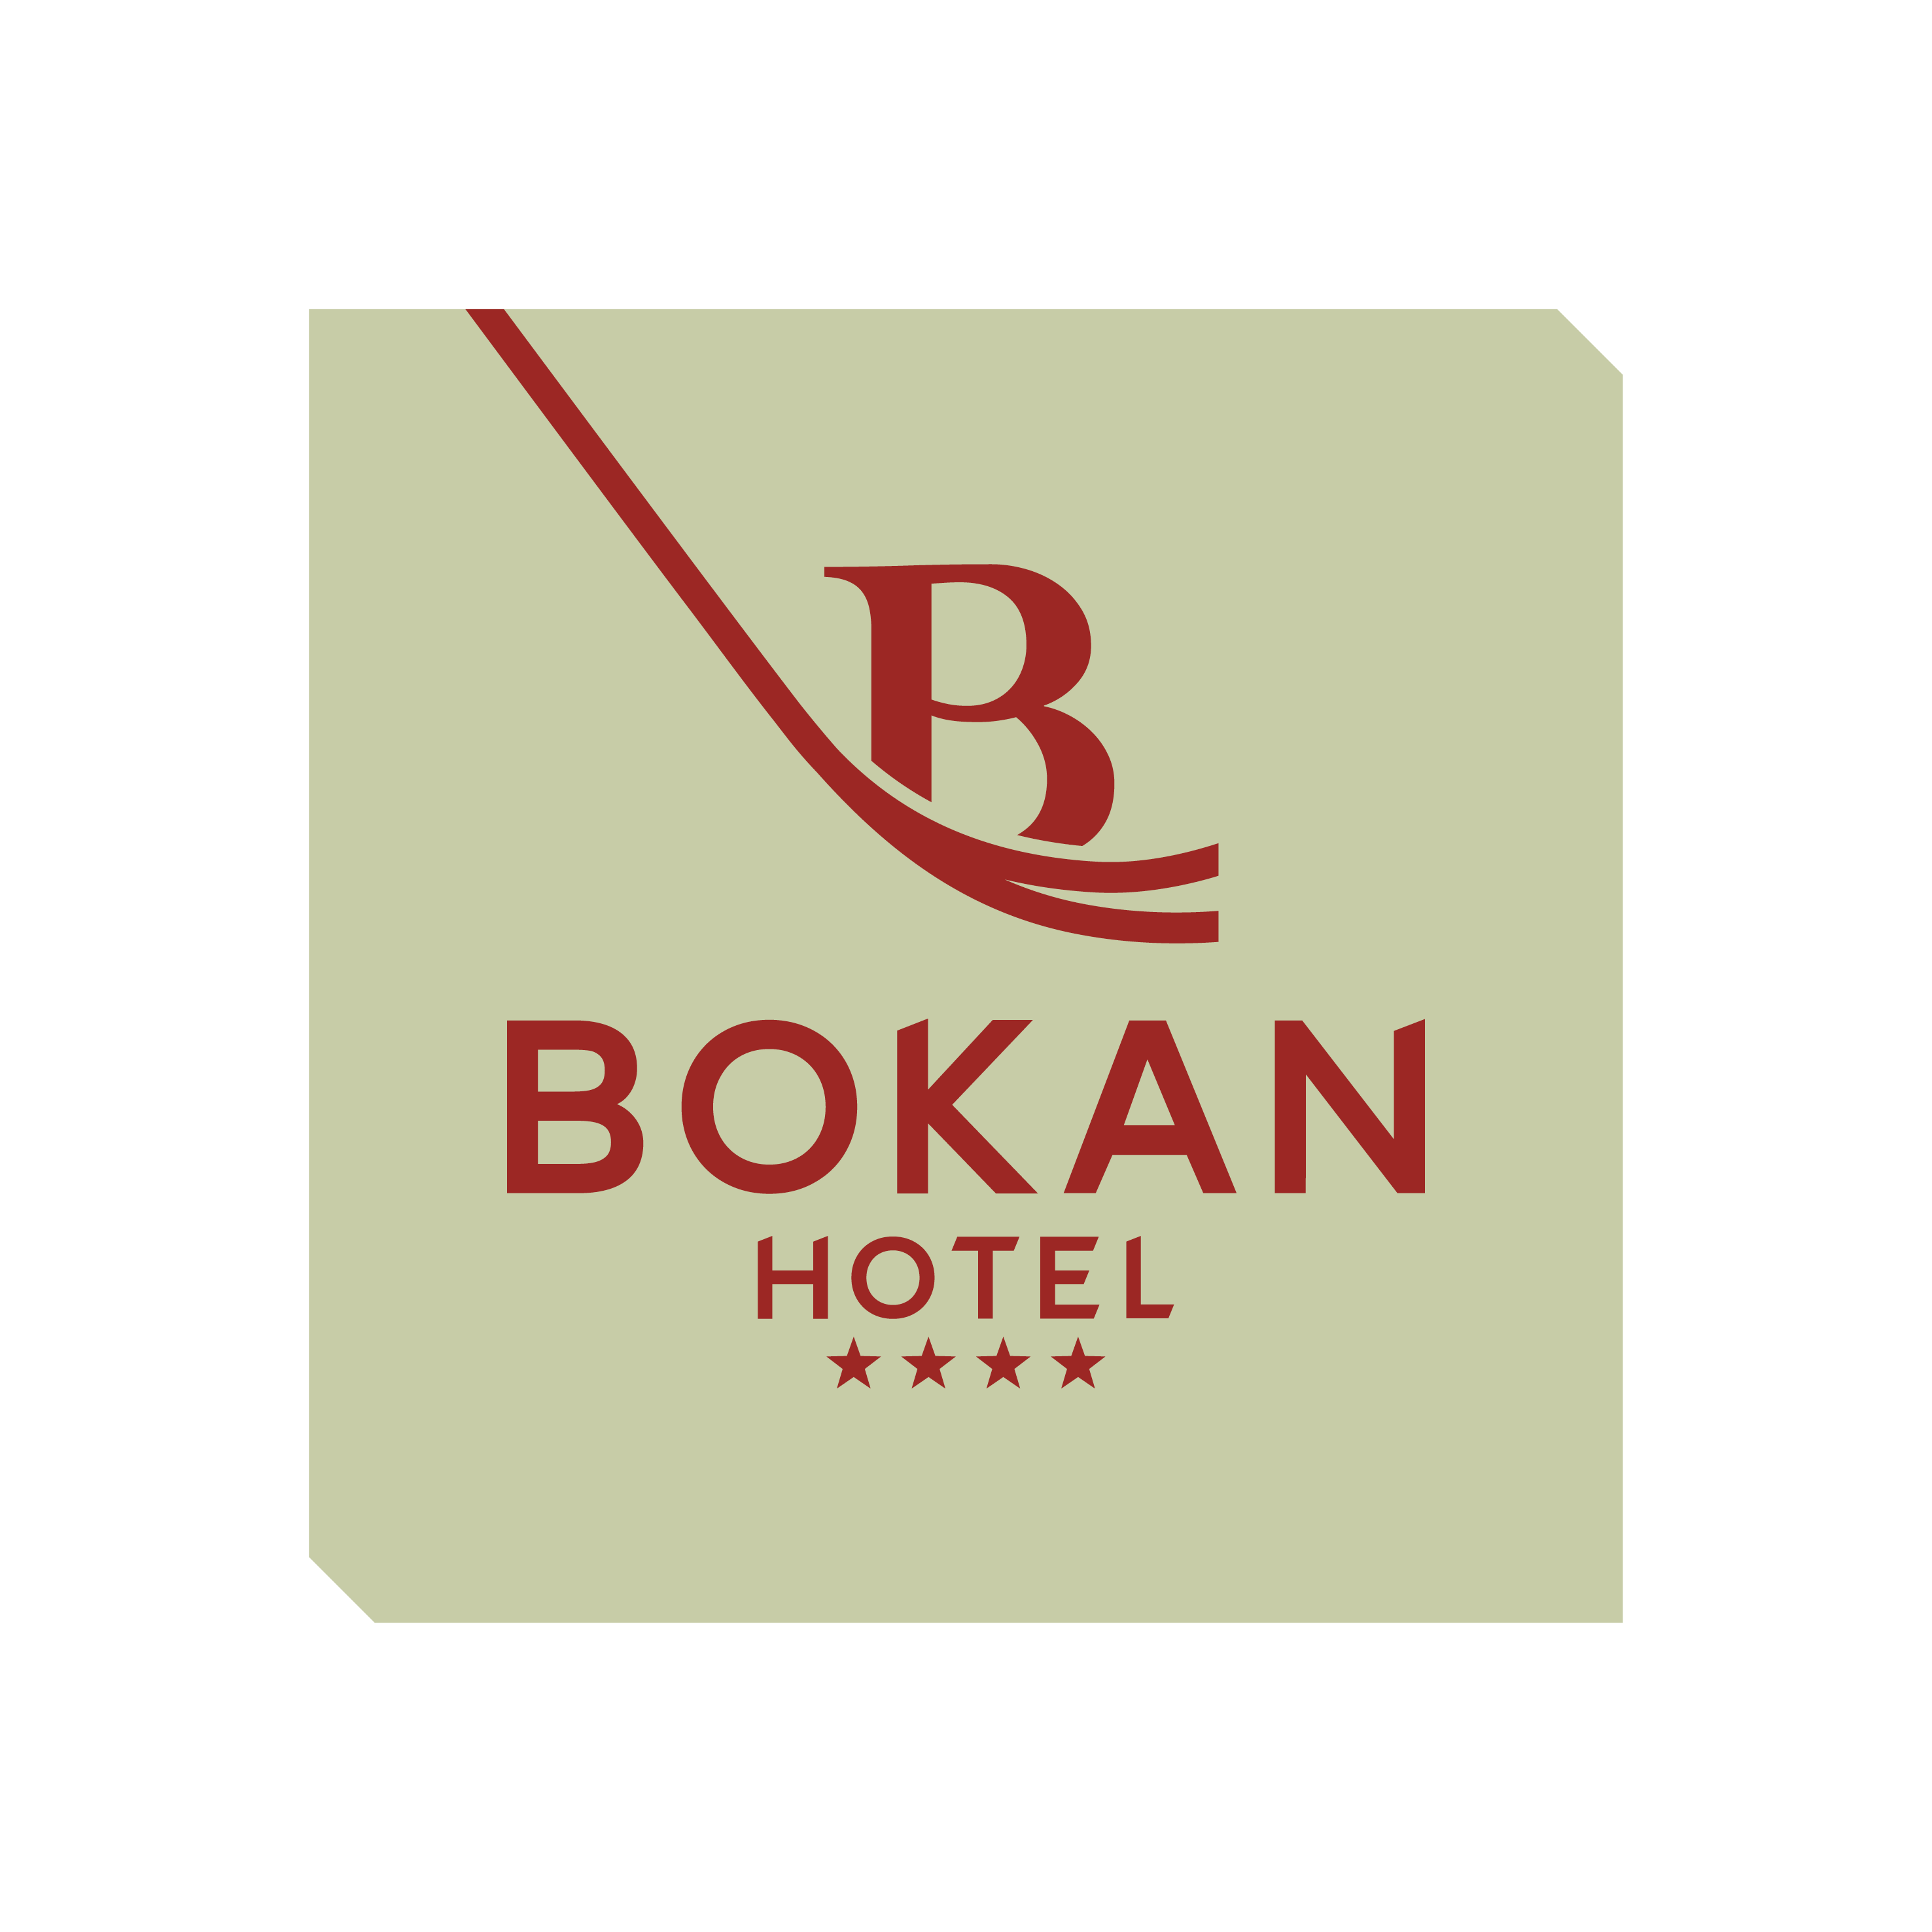 Bokan Hotel, Graz